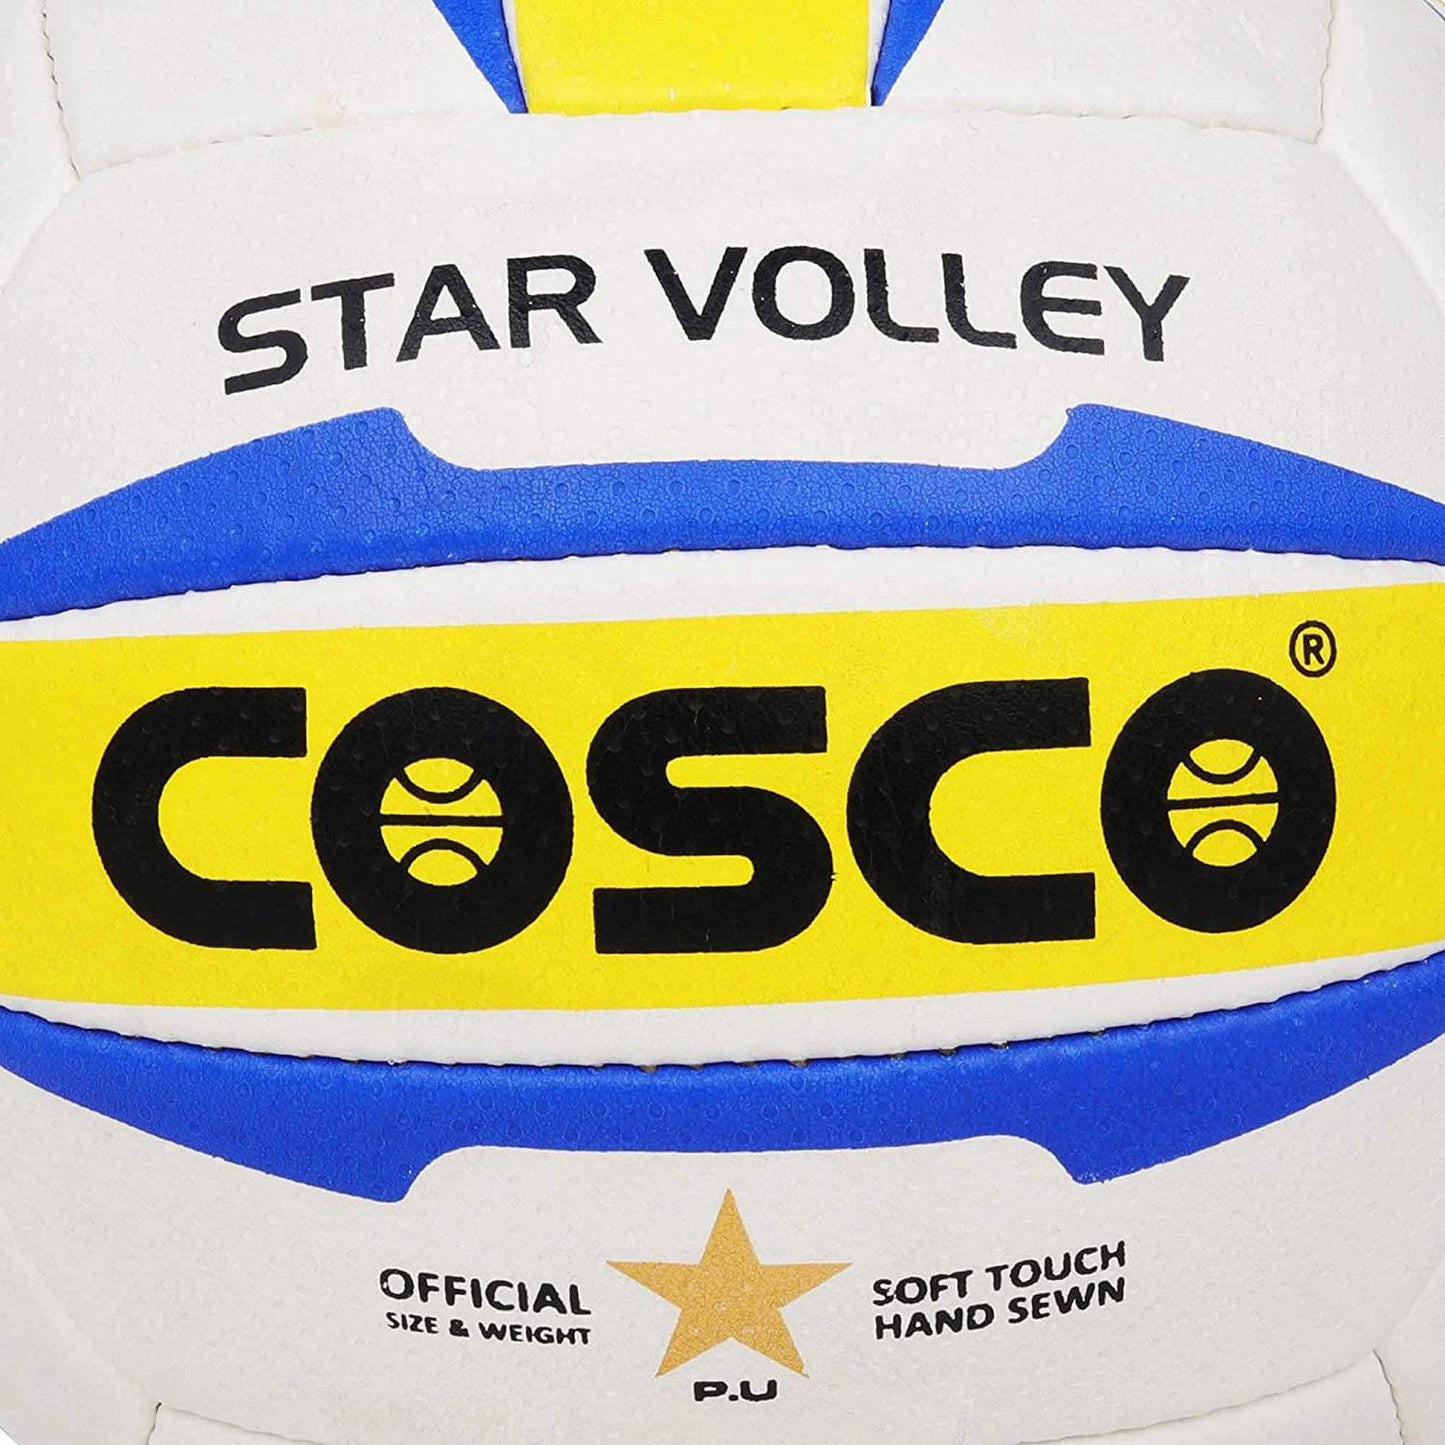 Cosco Star Volley Volleyball, Size 4 - Best Price online Prokicksports.com